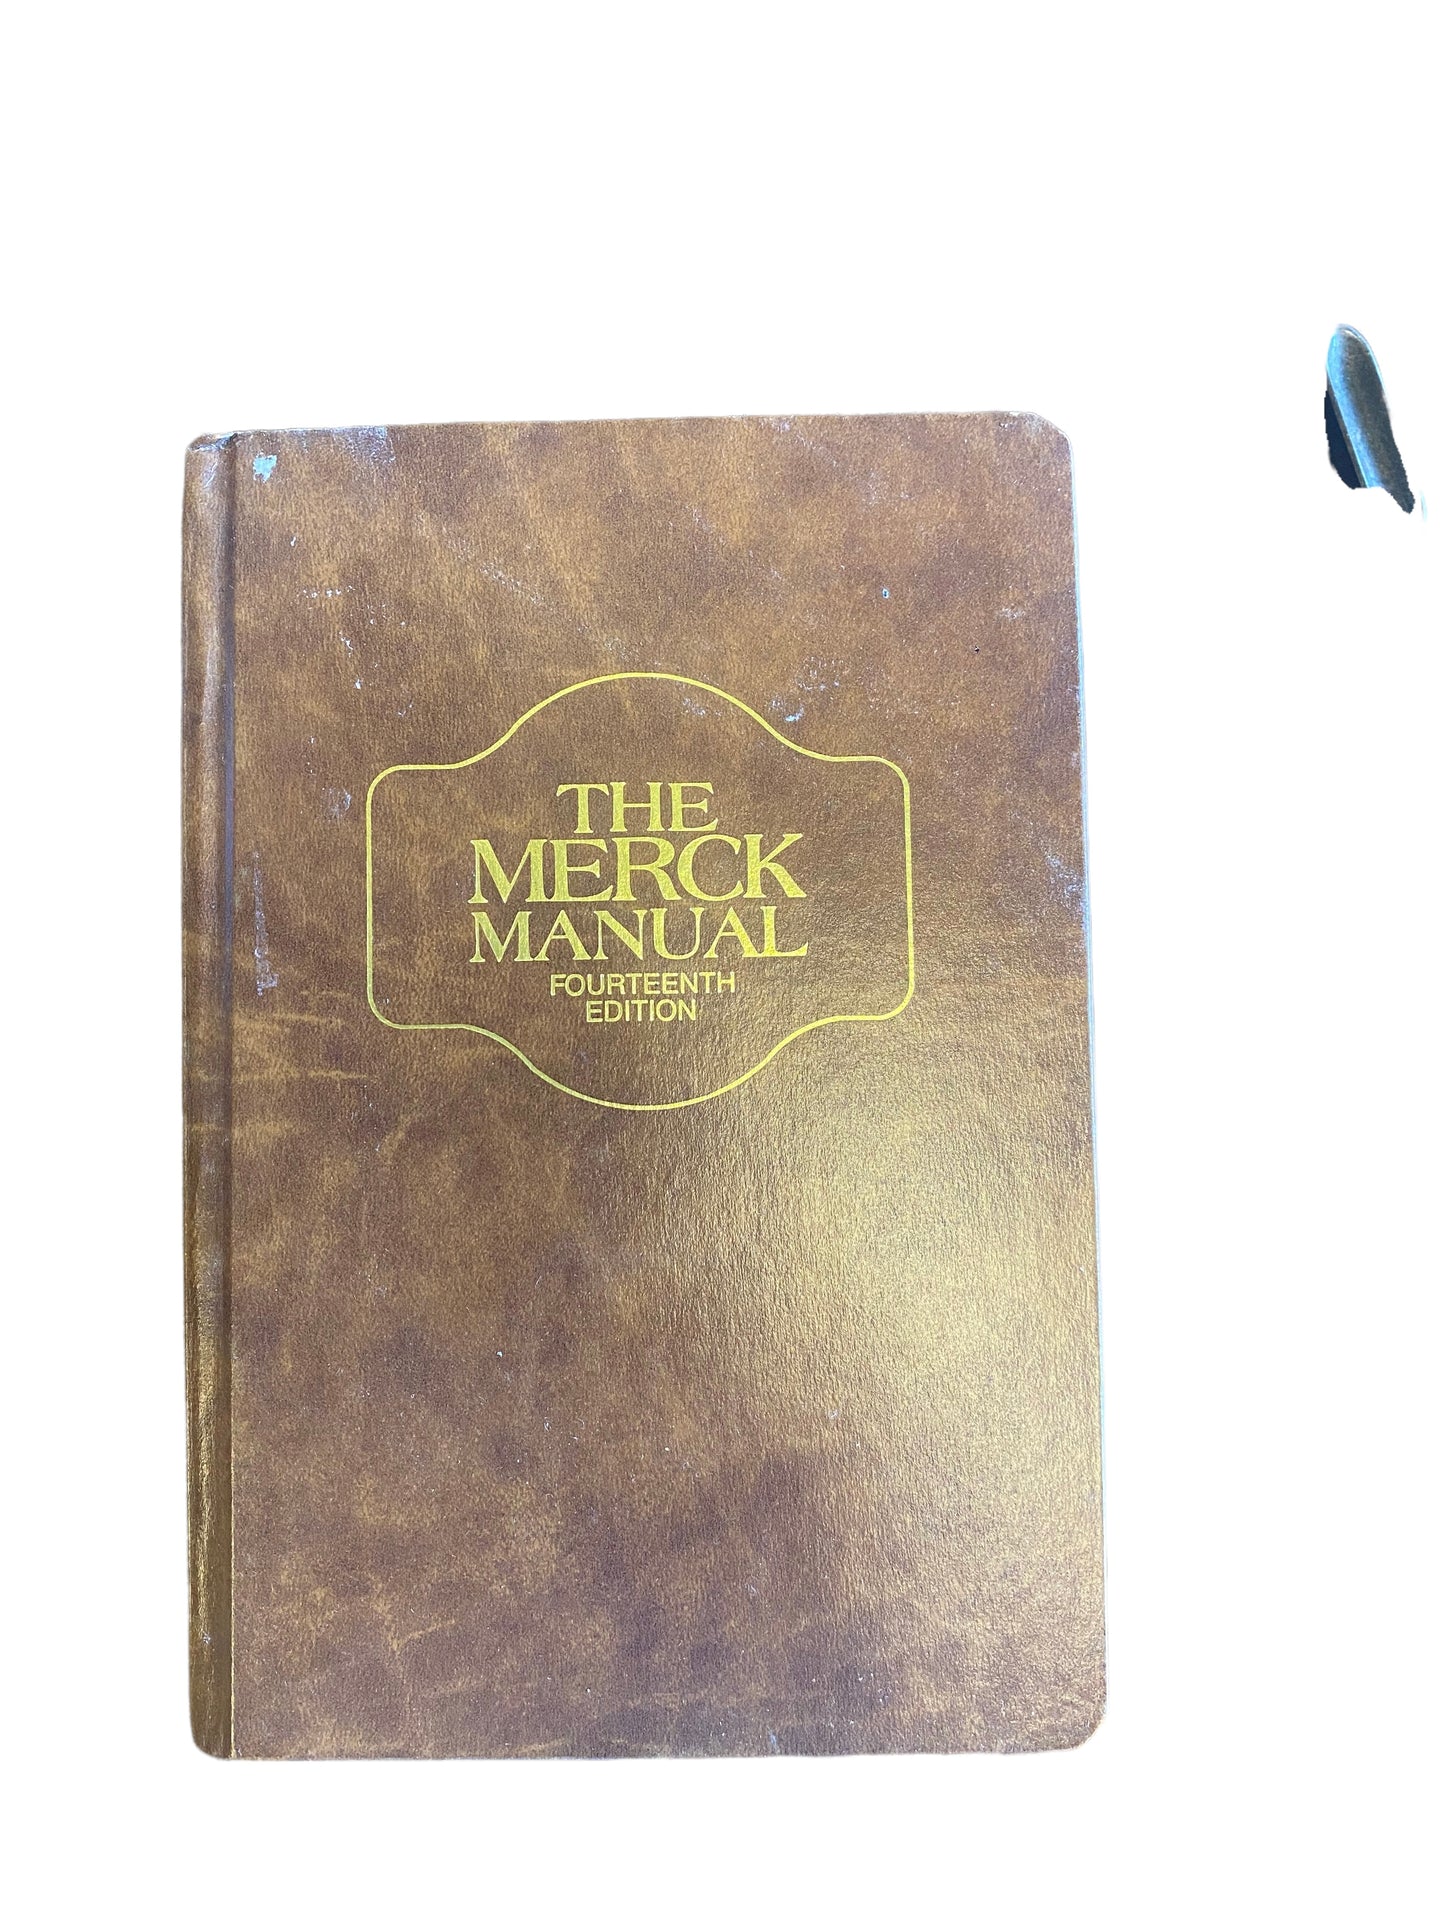 Vintage 1982 "Merck Manual" 14th Edition 1st Printing